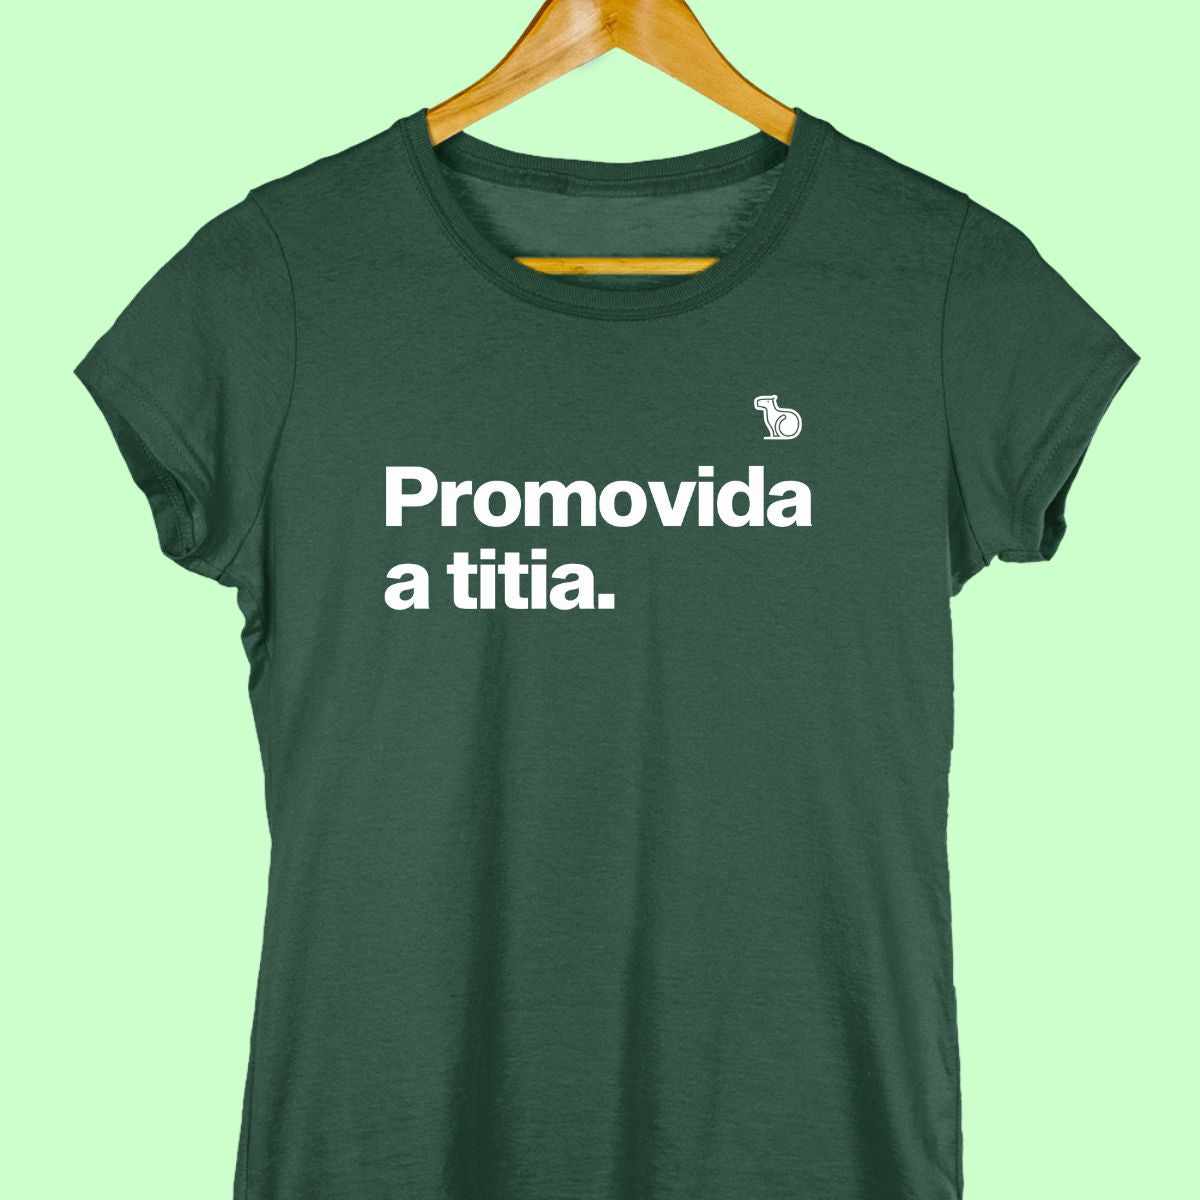 Camiseta com a frase "promovida a titia" feminina verde.